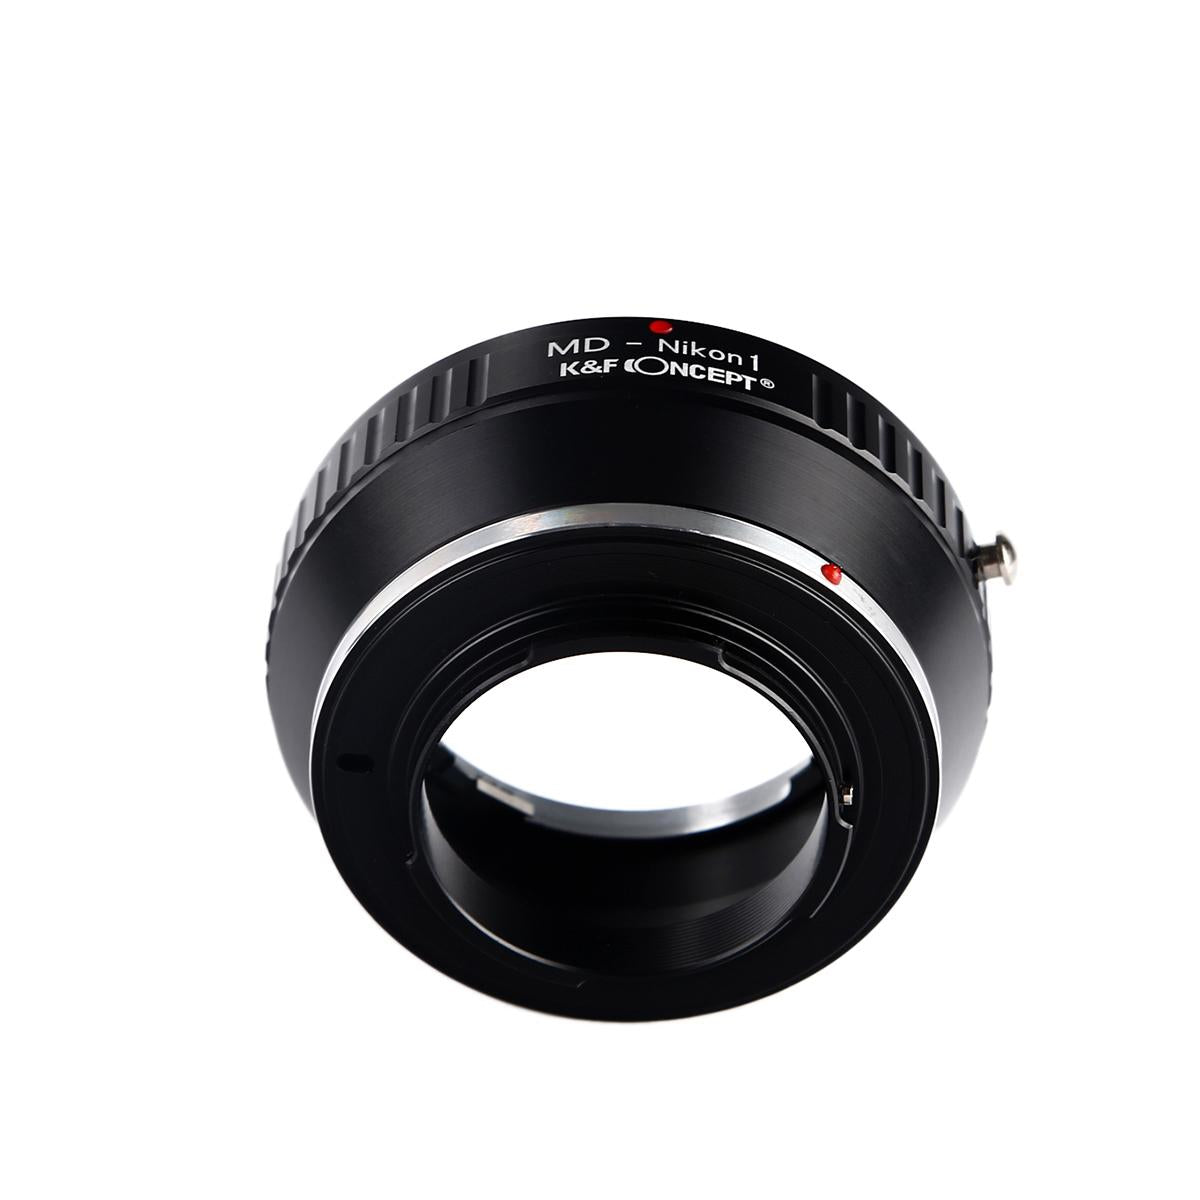 Minolta MD MC Lenses to Nikon 1 Lens Mount Adapter K&F Concept M15201 Lens Adapter